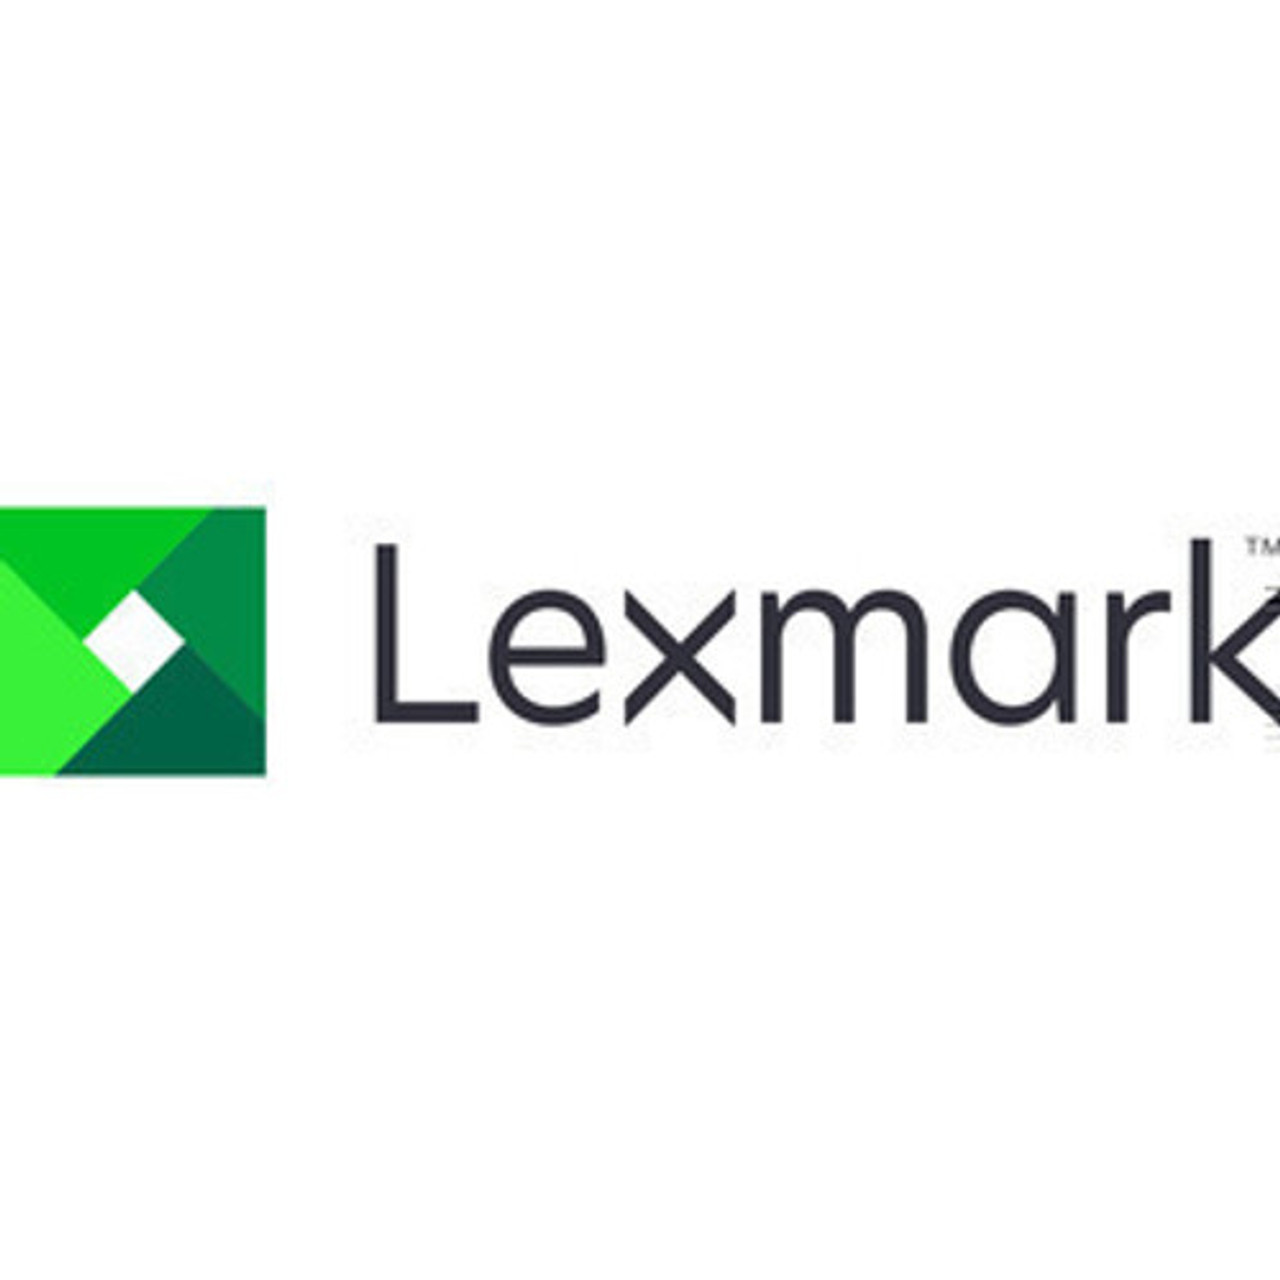 Lexmark 550-Sheet tray insert, MX81x - 41X0977